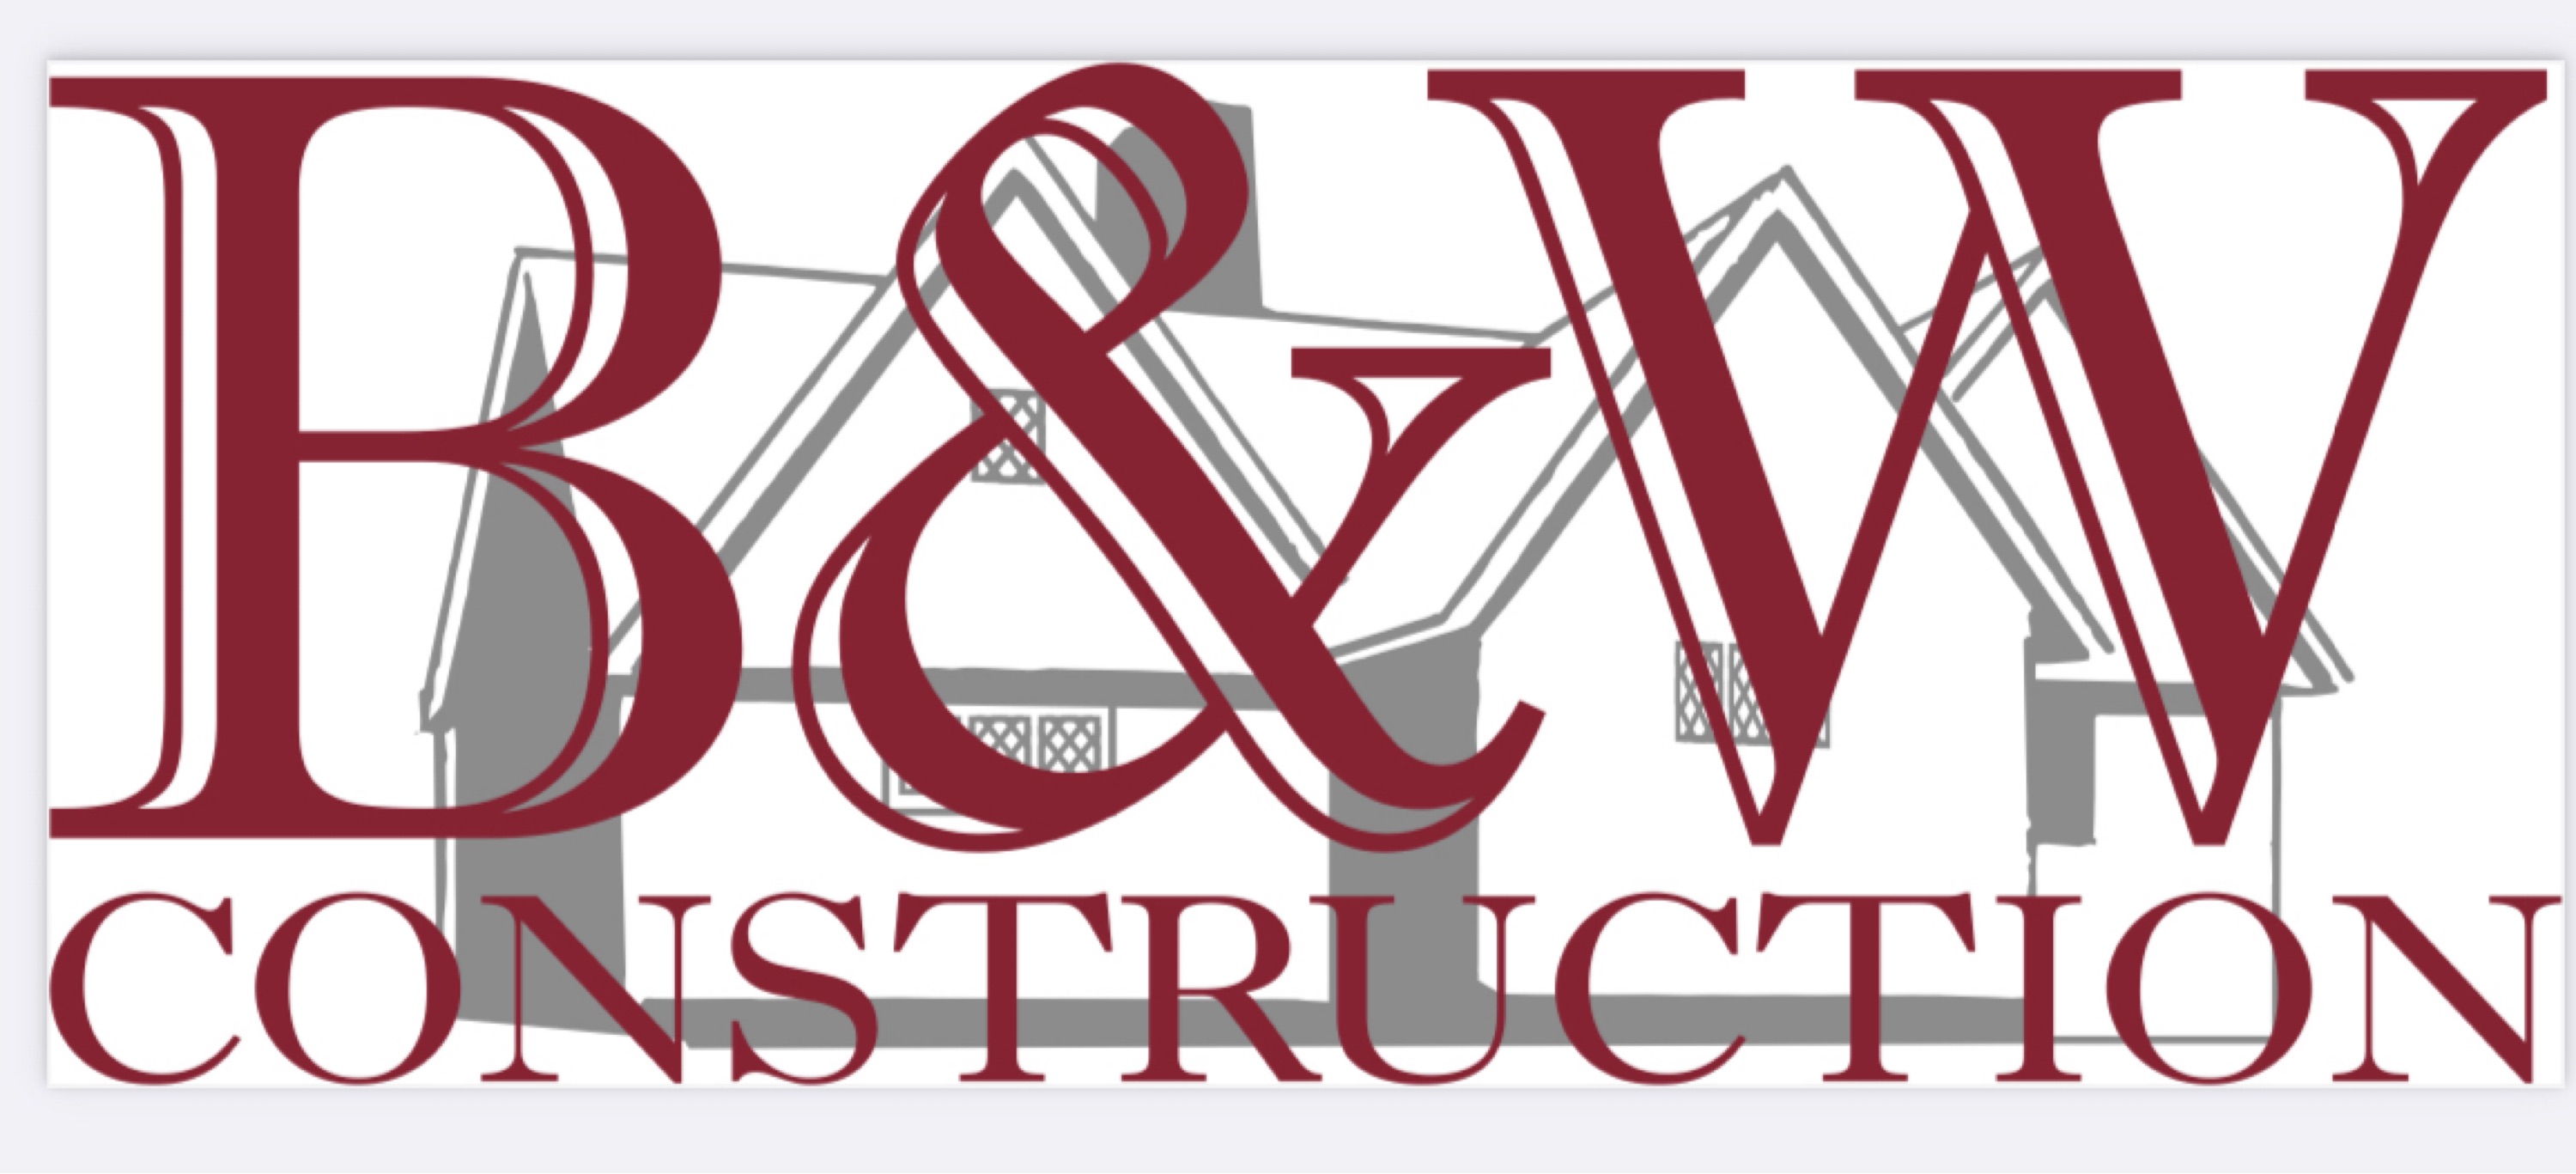 B & W Construction Logo